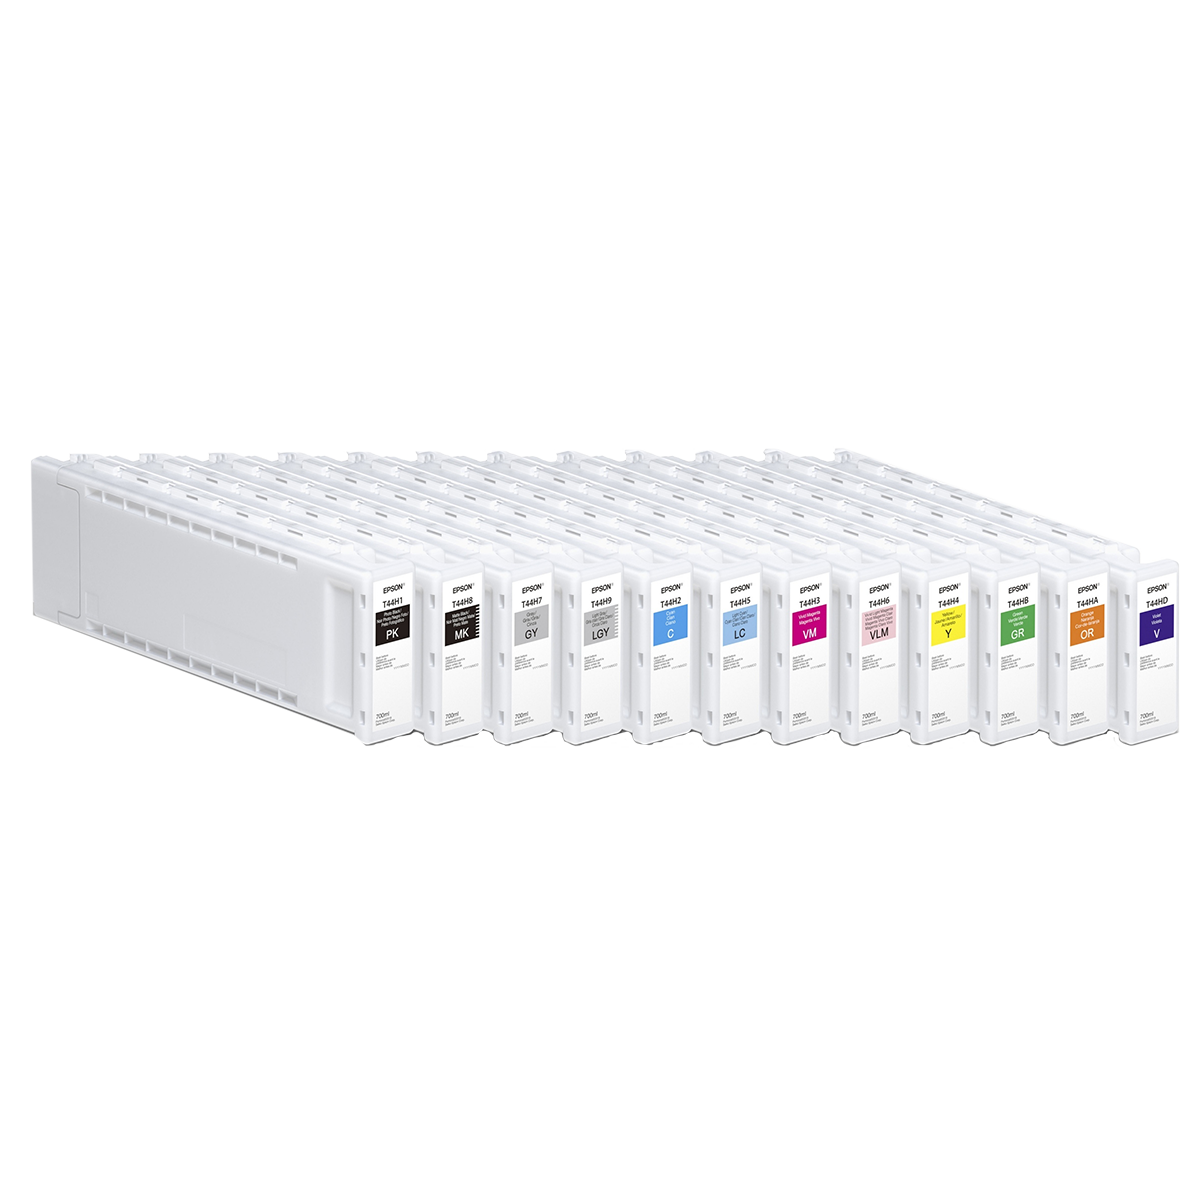 Epson UltraChrome Pro 12 150ml Ink Cartridges - for 7570 & 9570, Colors: Black